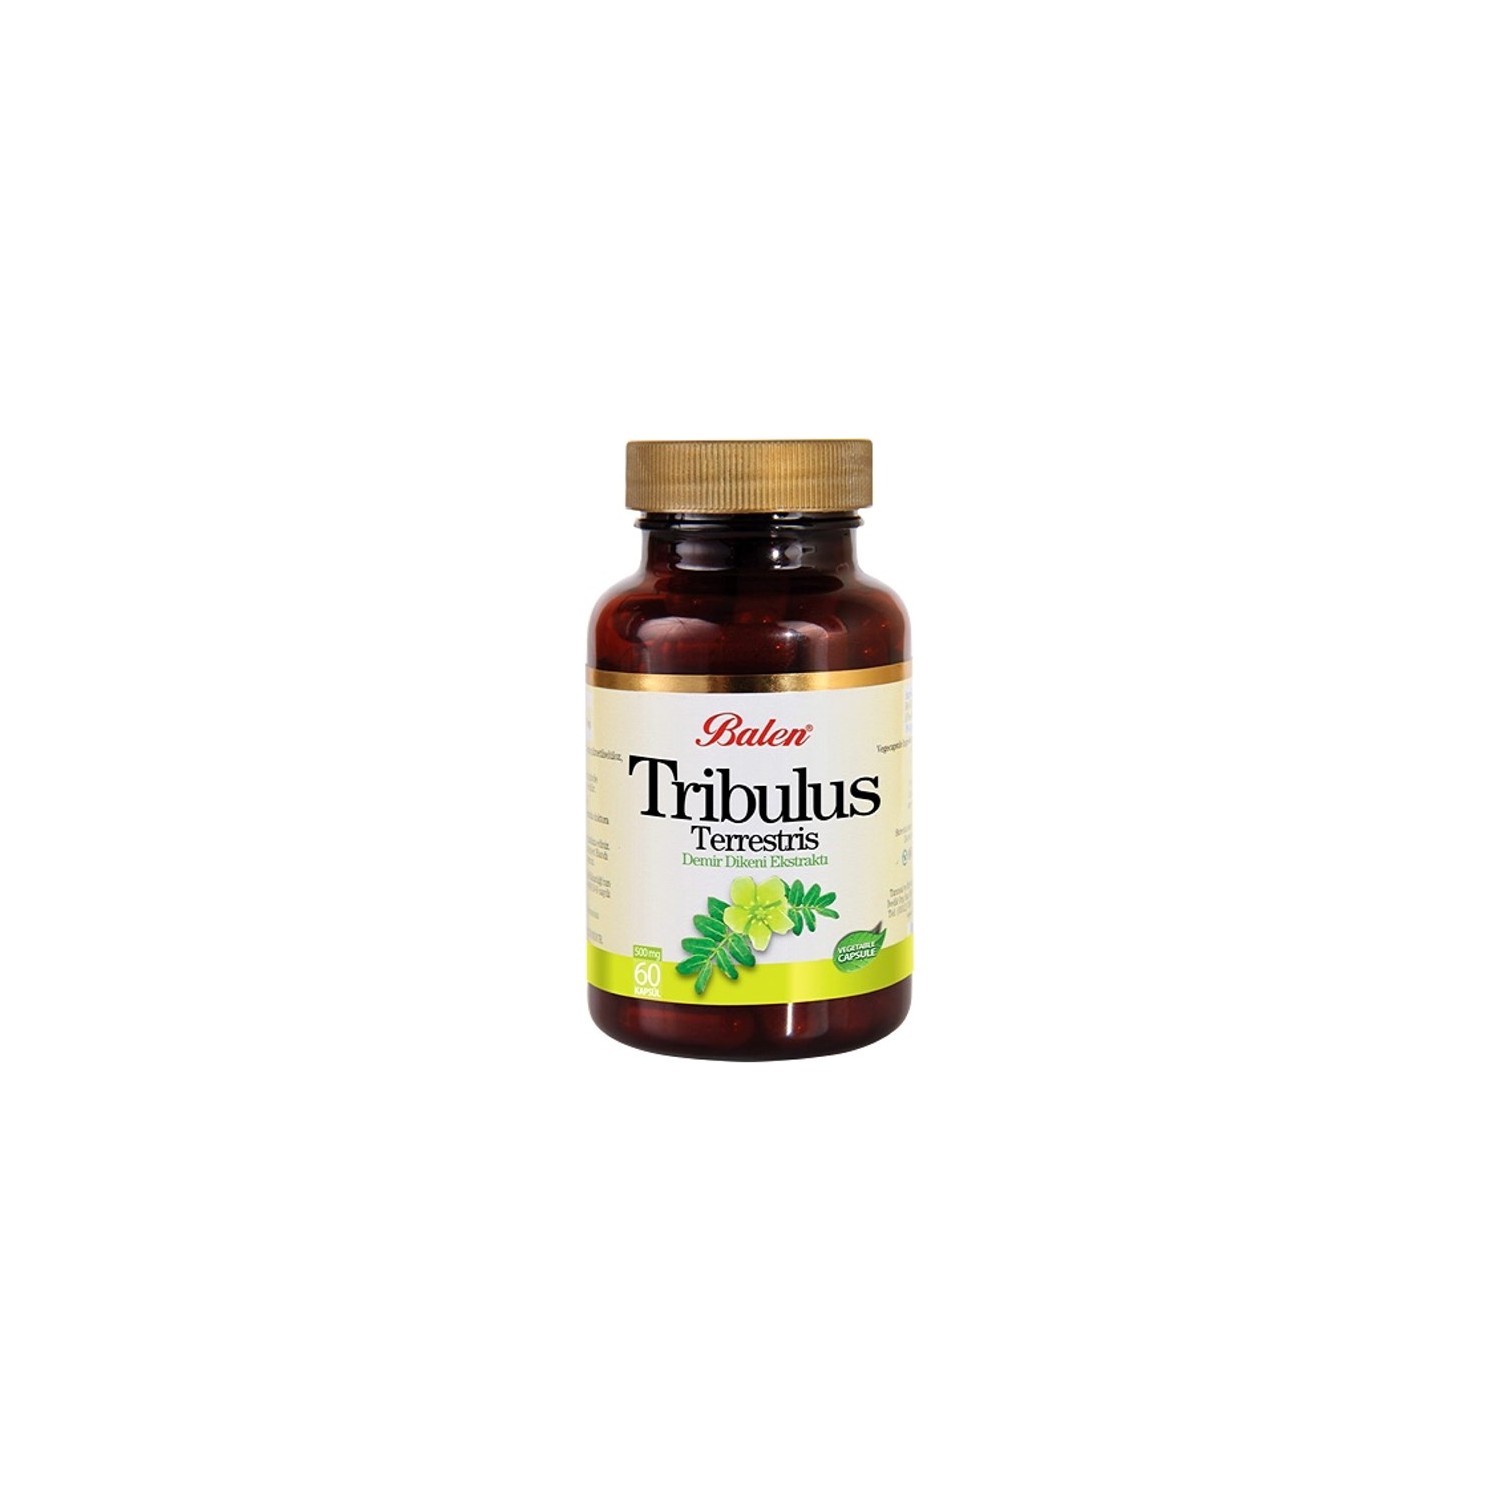 Пищевая добавка Balen Tribulus Terrestris 500 мг, 60 капсул hot selling natural tribulus terrestris extract powder 10 1